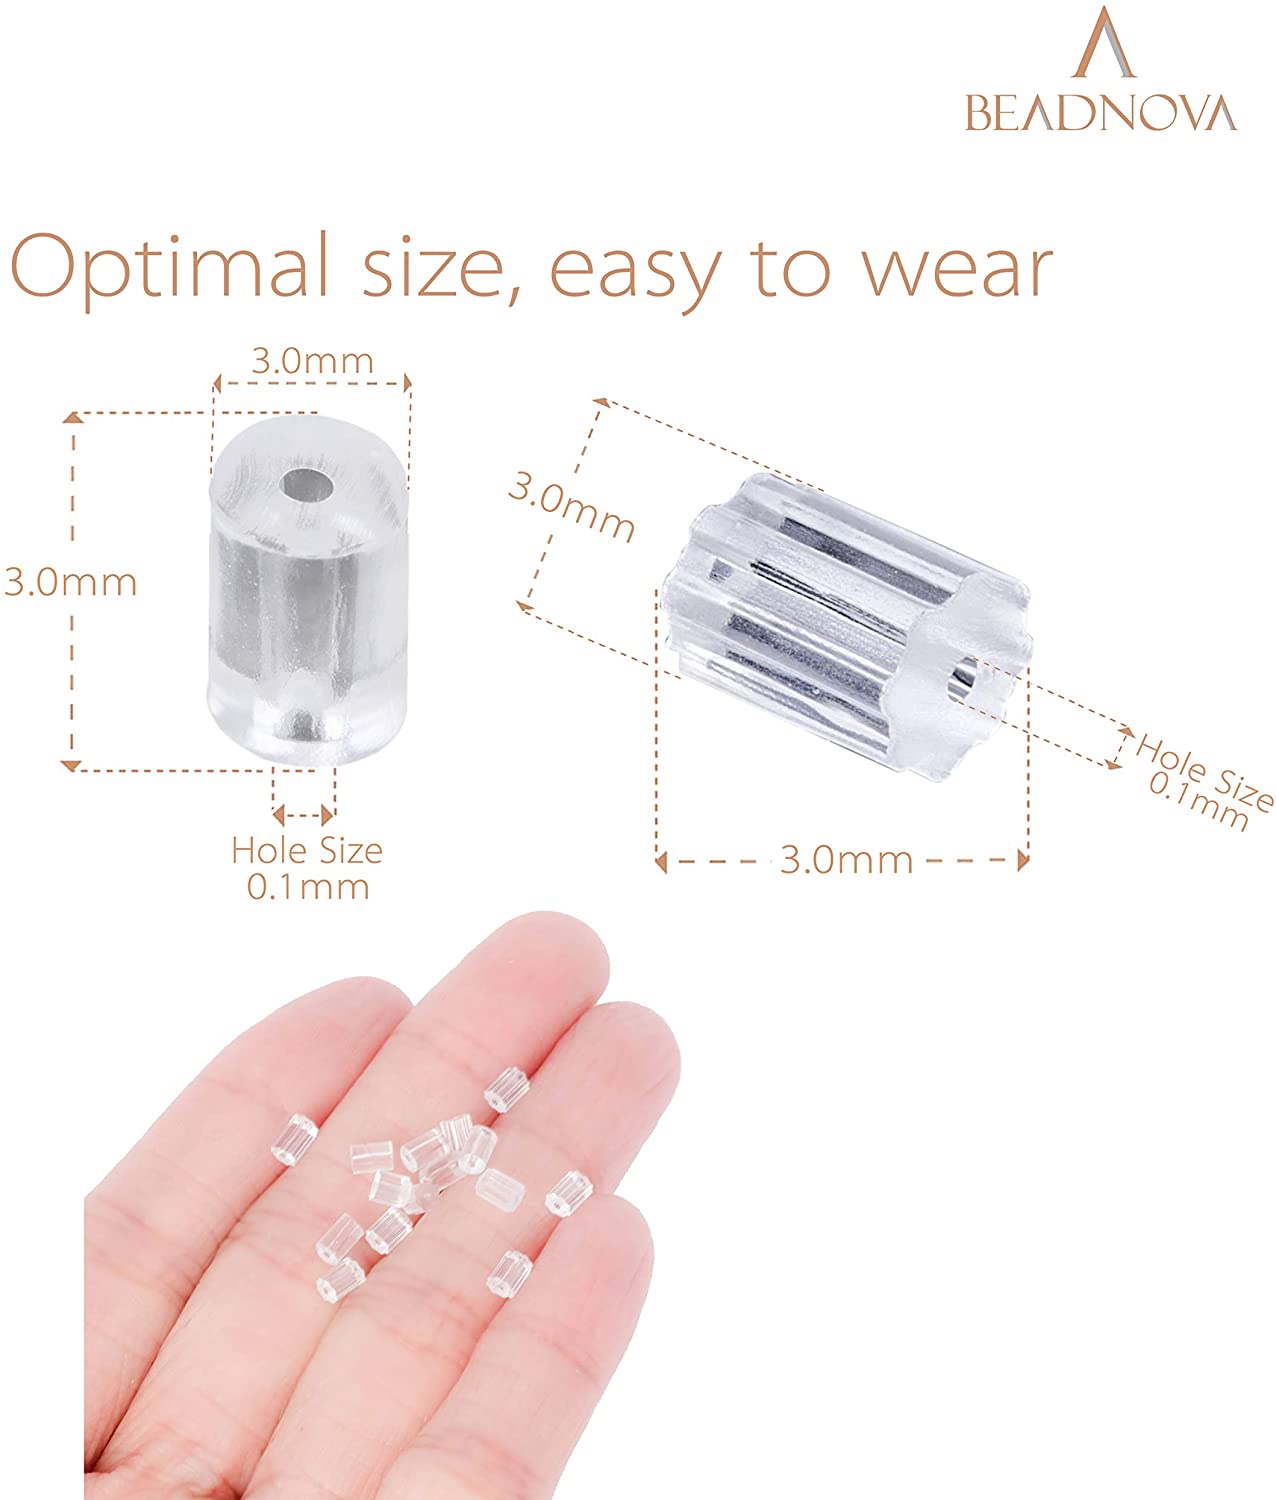 https://www.beadnova.com/wp-content/uploads/2021/01/BEADNOVA-Clear-Plastic-Earring-Backs-Rubber-Earring-Backings-Replacement-1000pcs-2.jpg